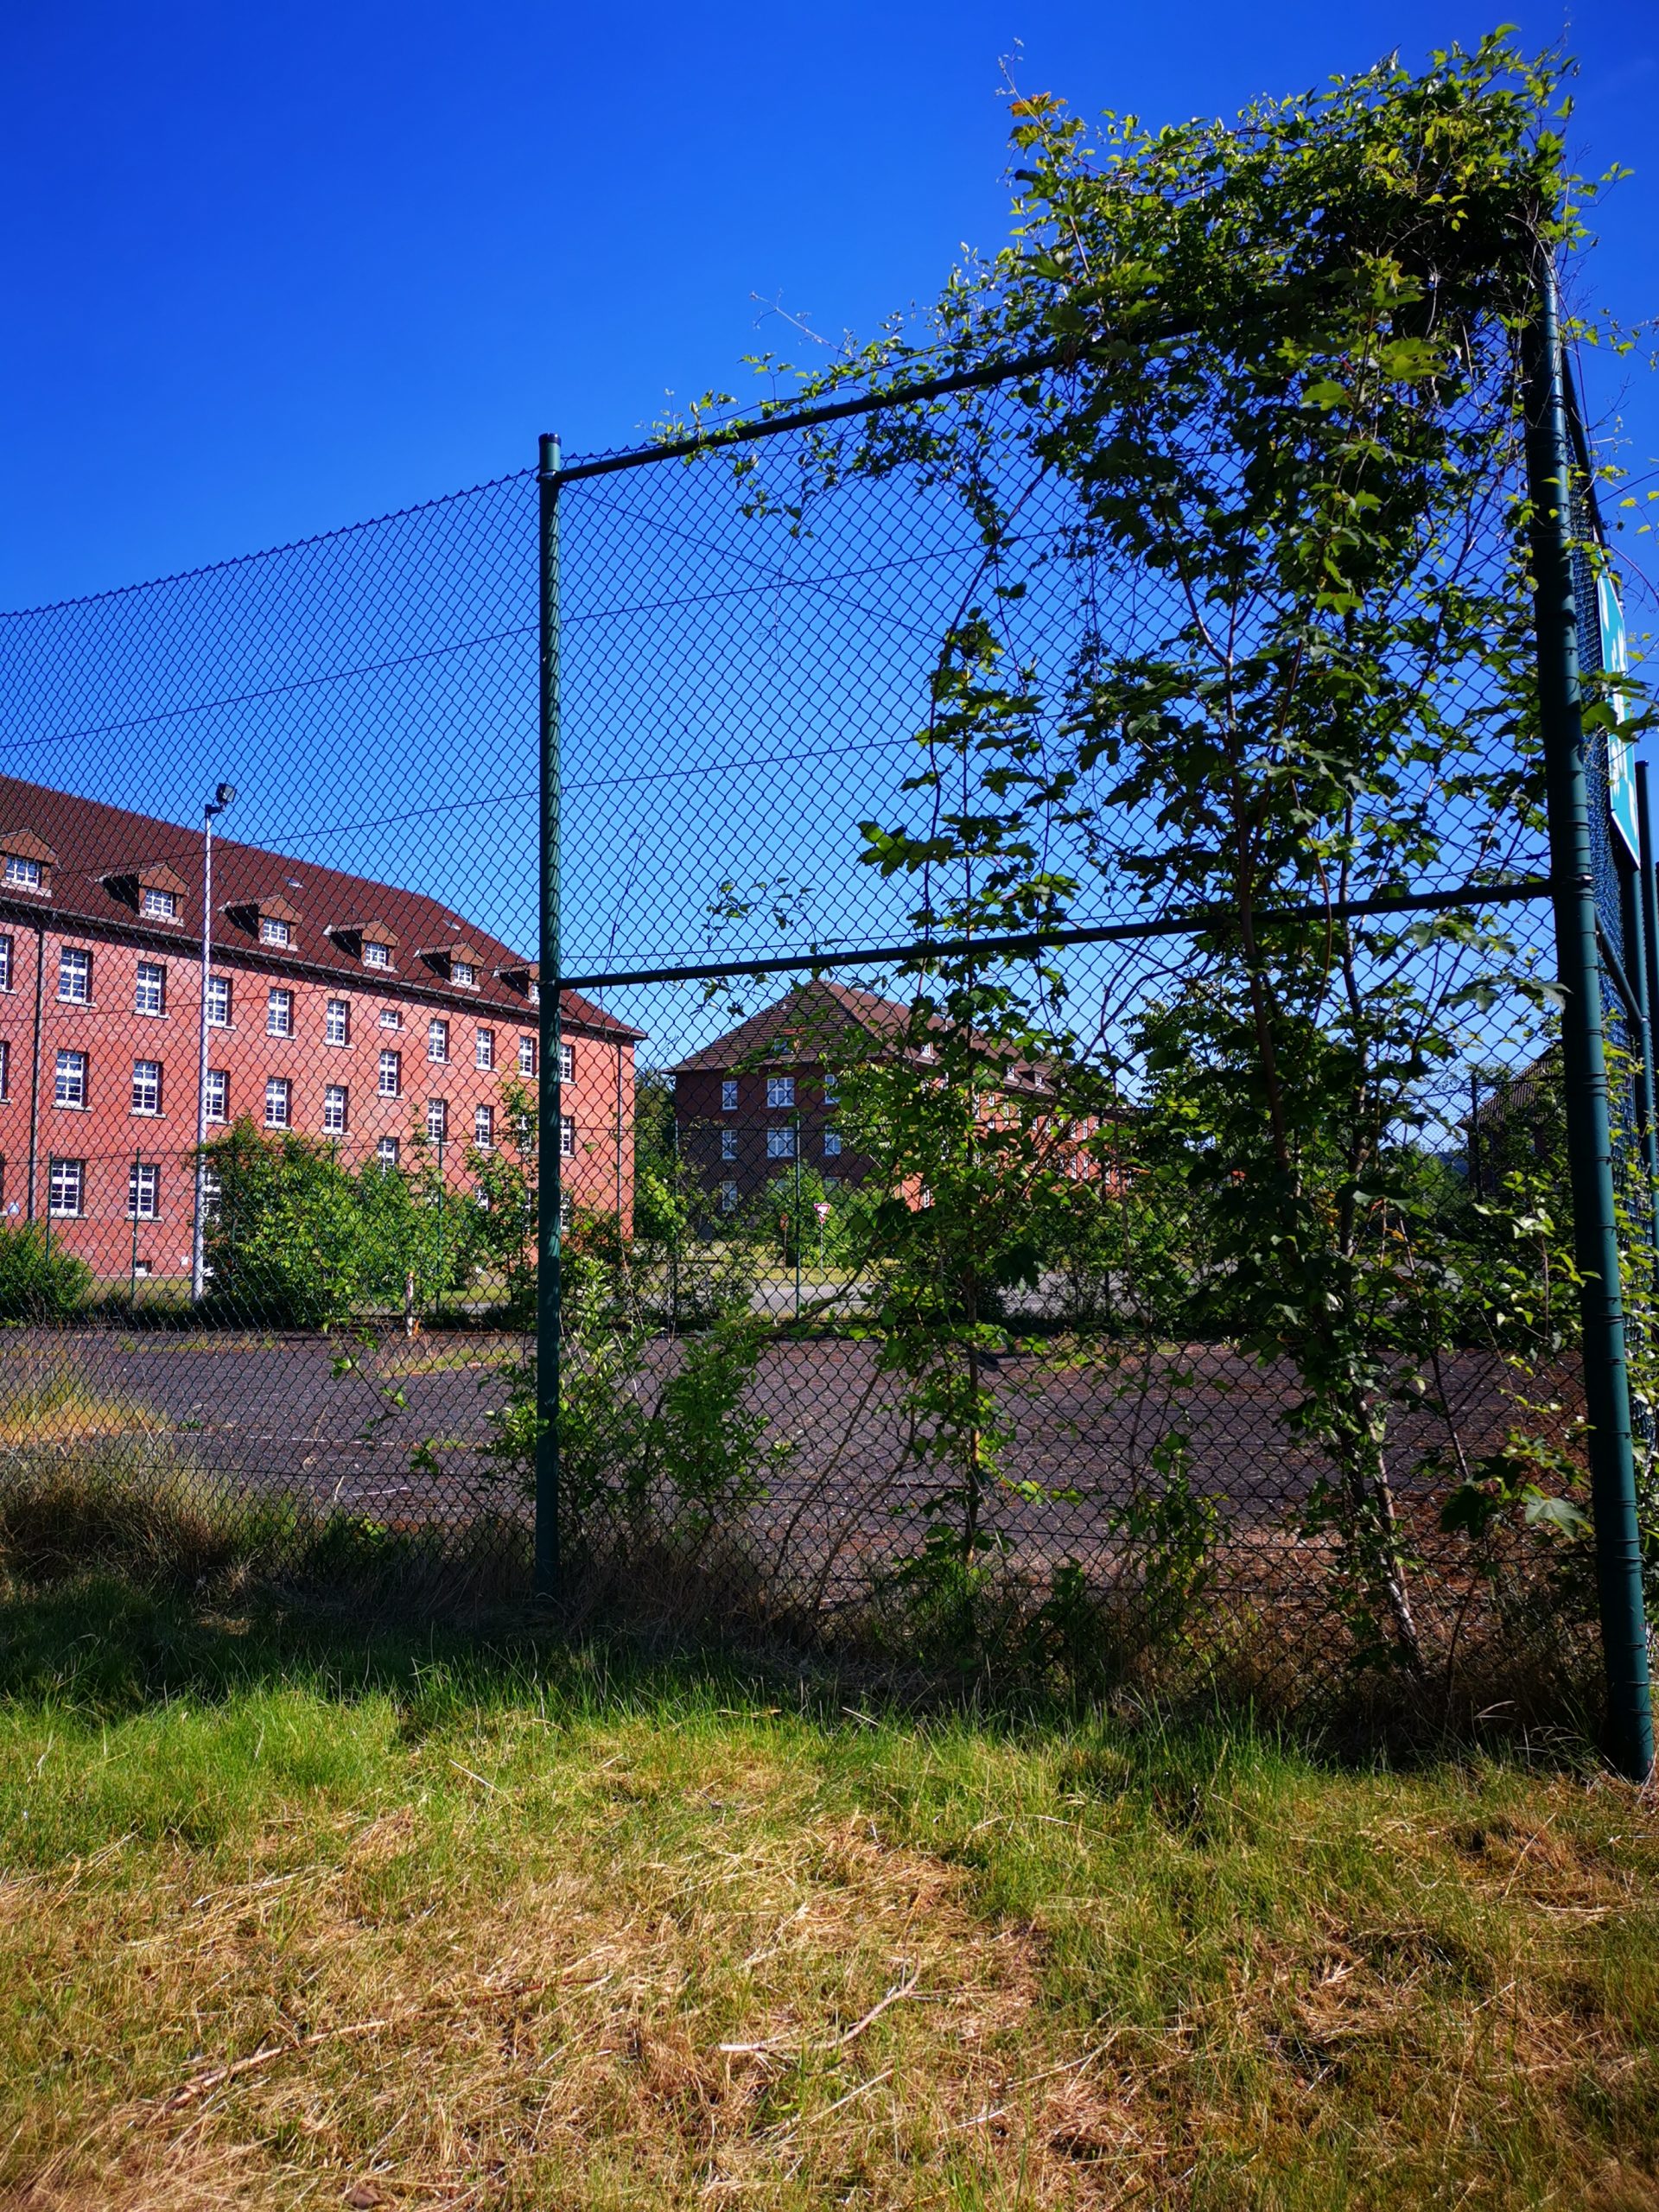 Transurban_ sportsground on barracks